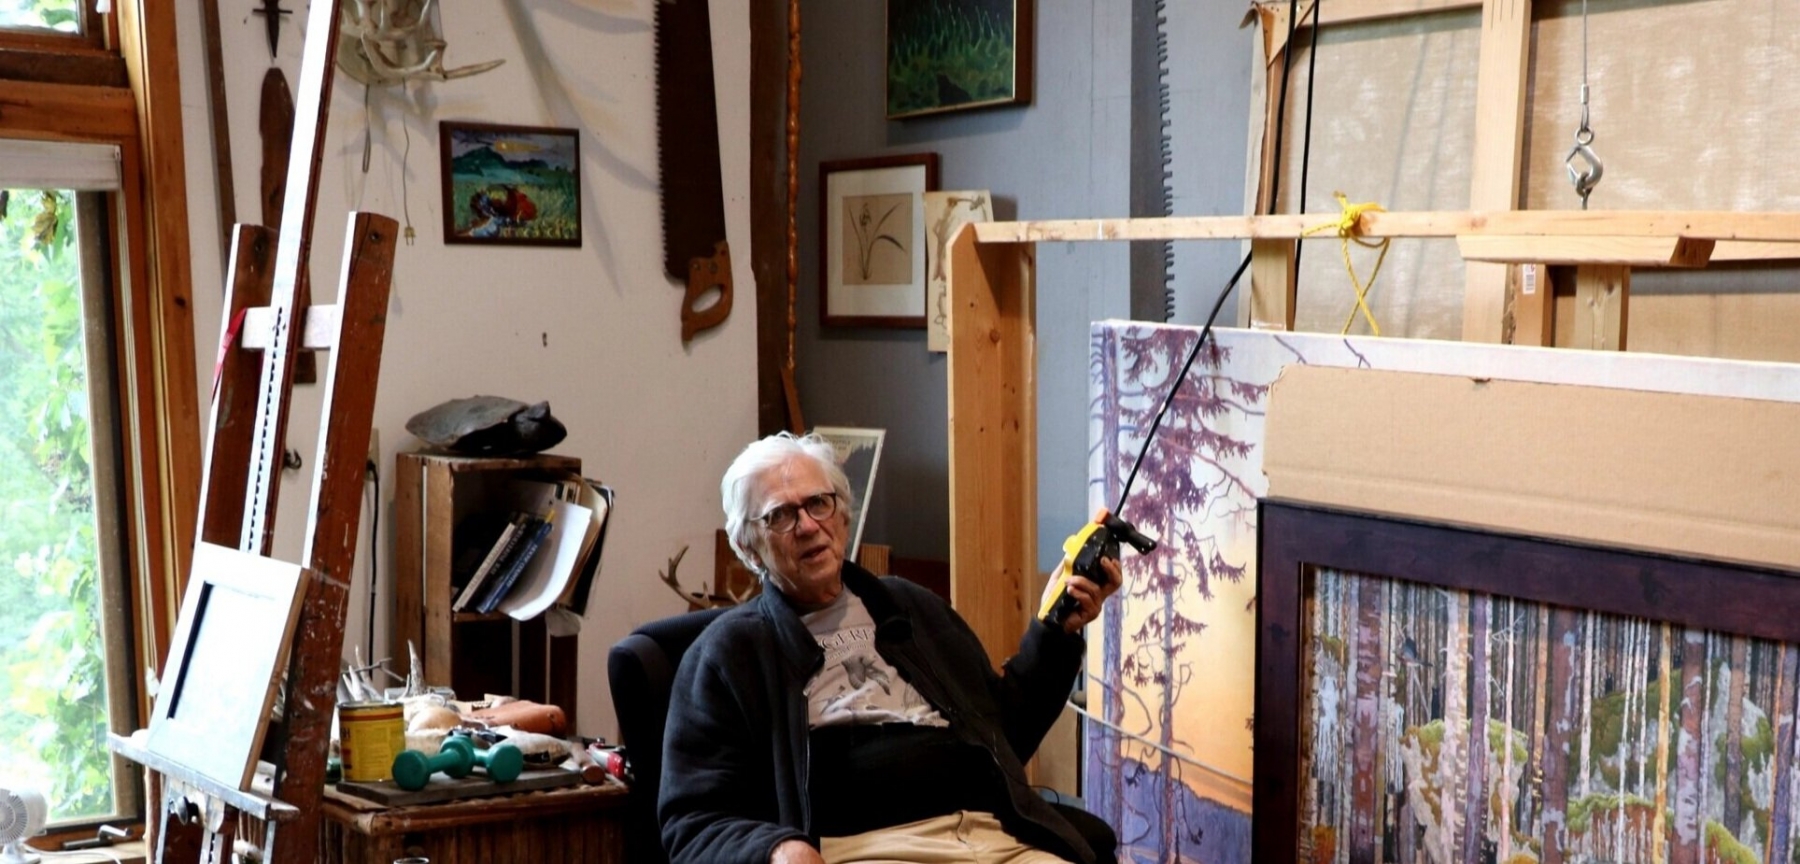 Tom Uttech in his studio, August 2020